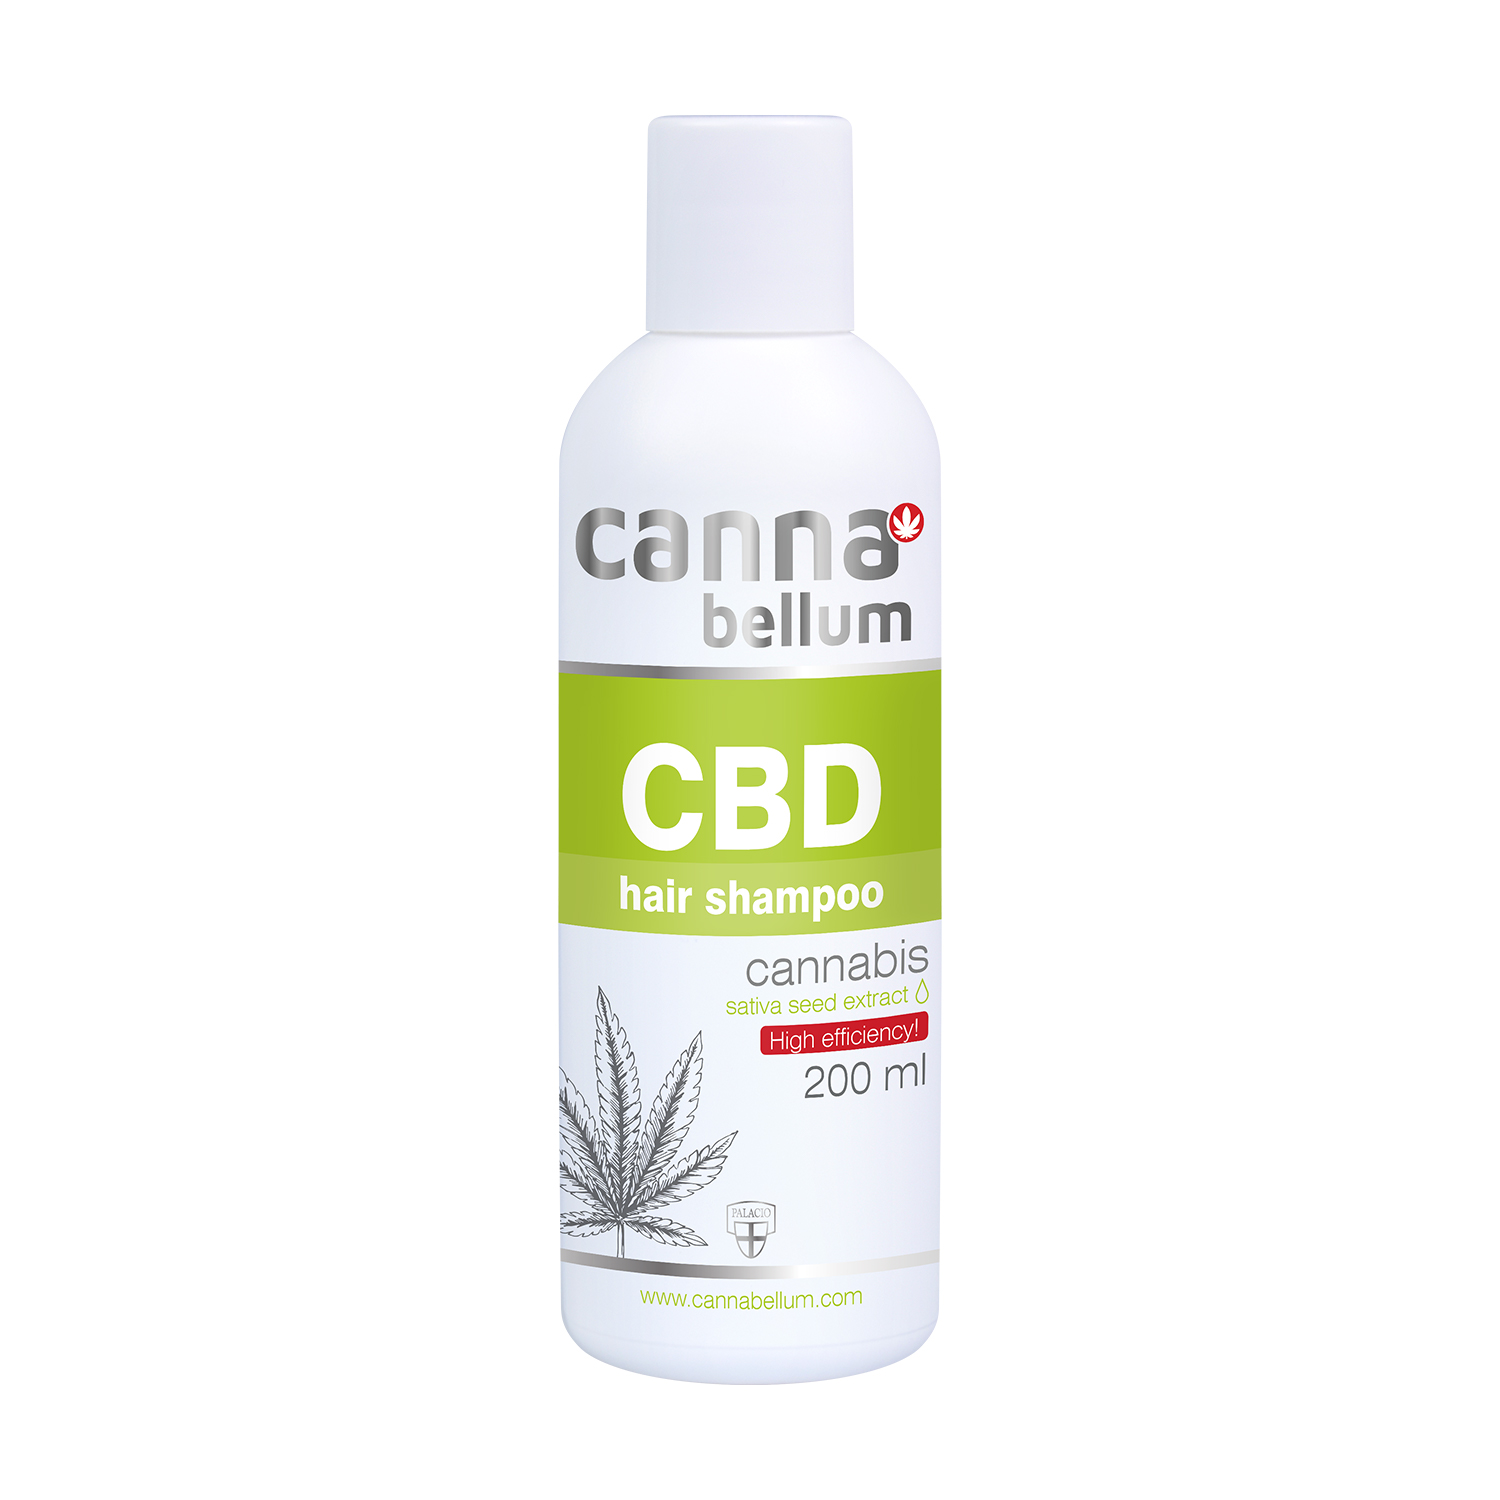 Cannabellum CBD hair shampoo 200ml P1251 WEB 101